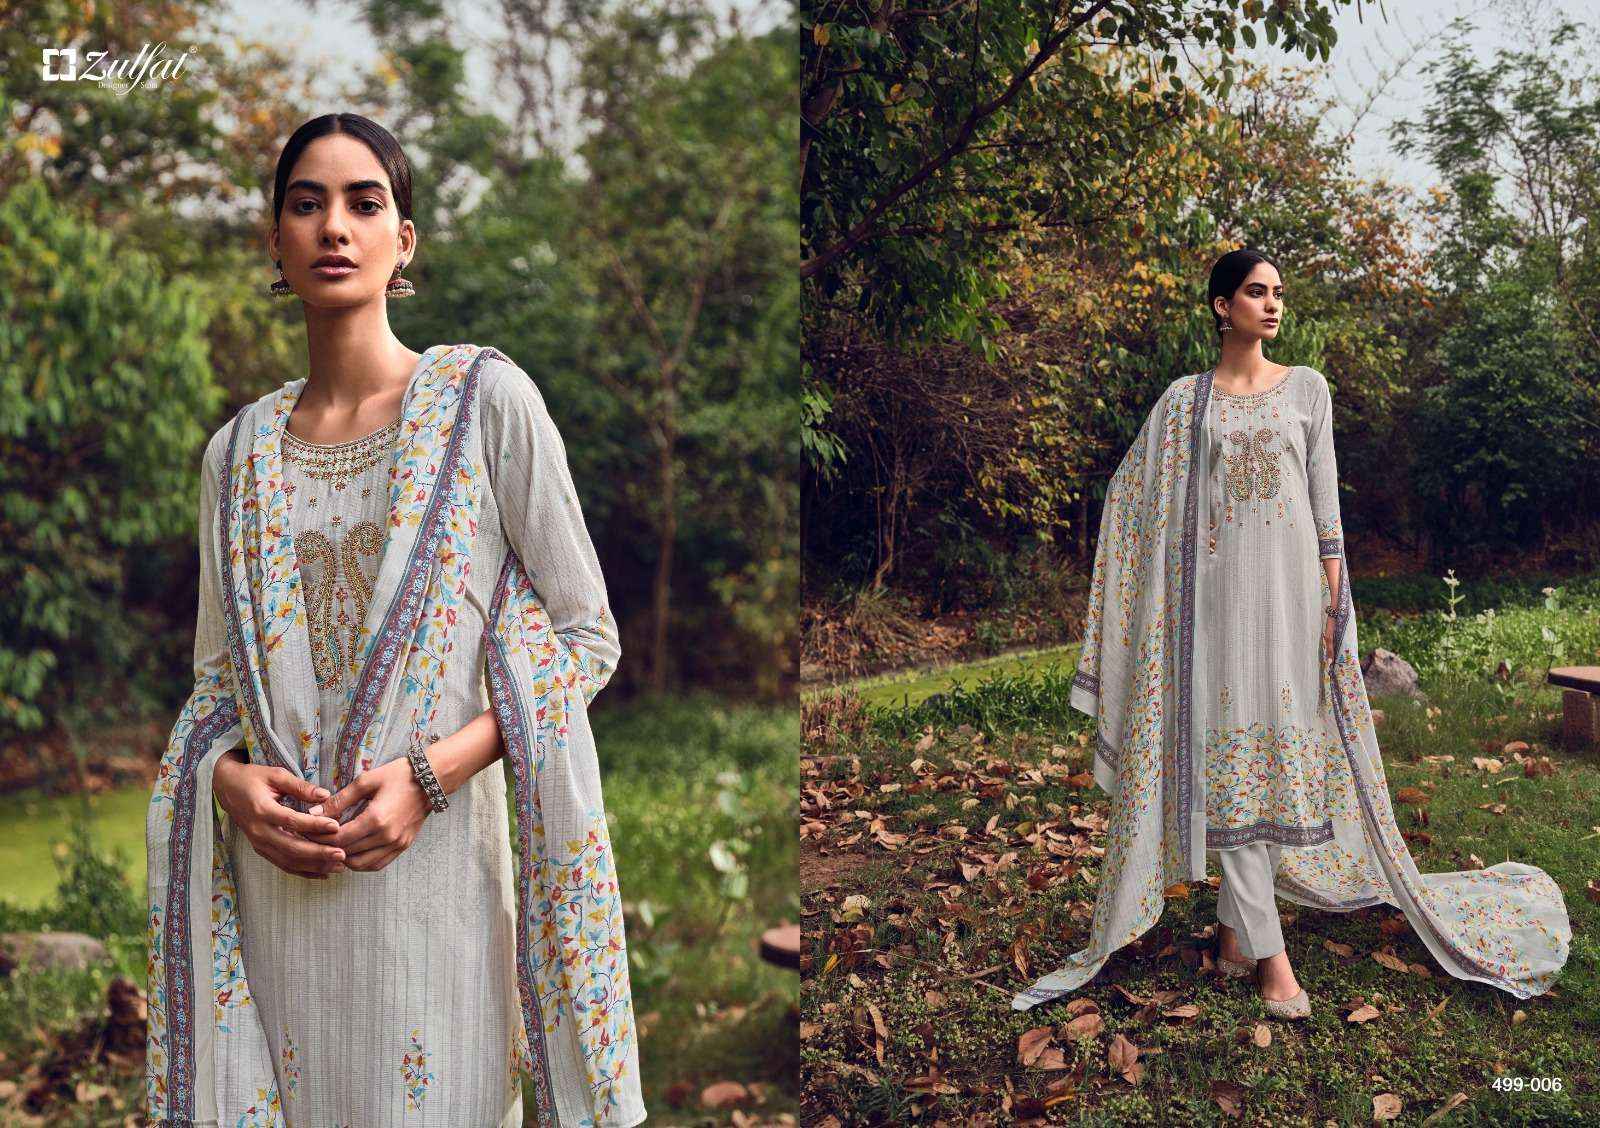 Zulfat Designer Chinaar Cotton Dress Material 10 pcs Catalogue